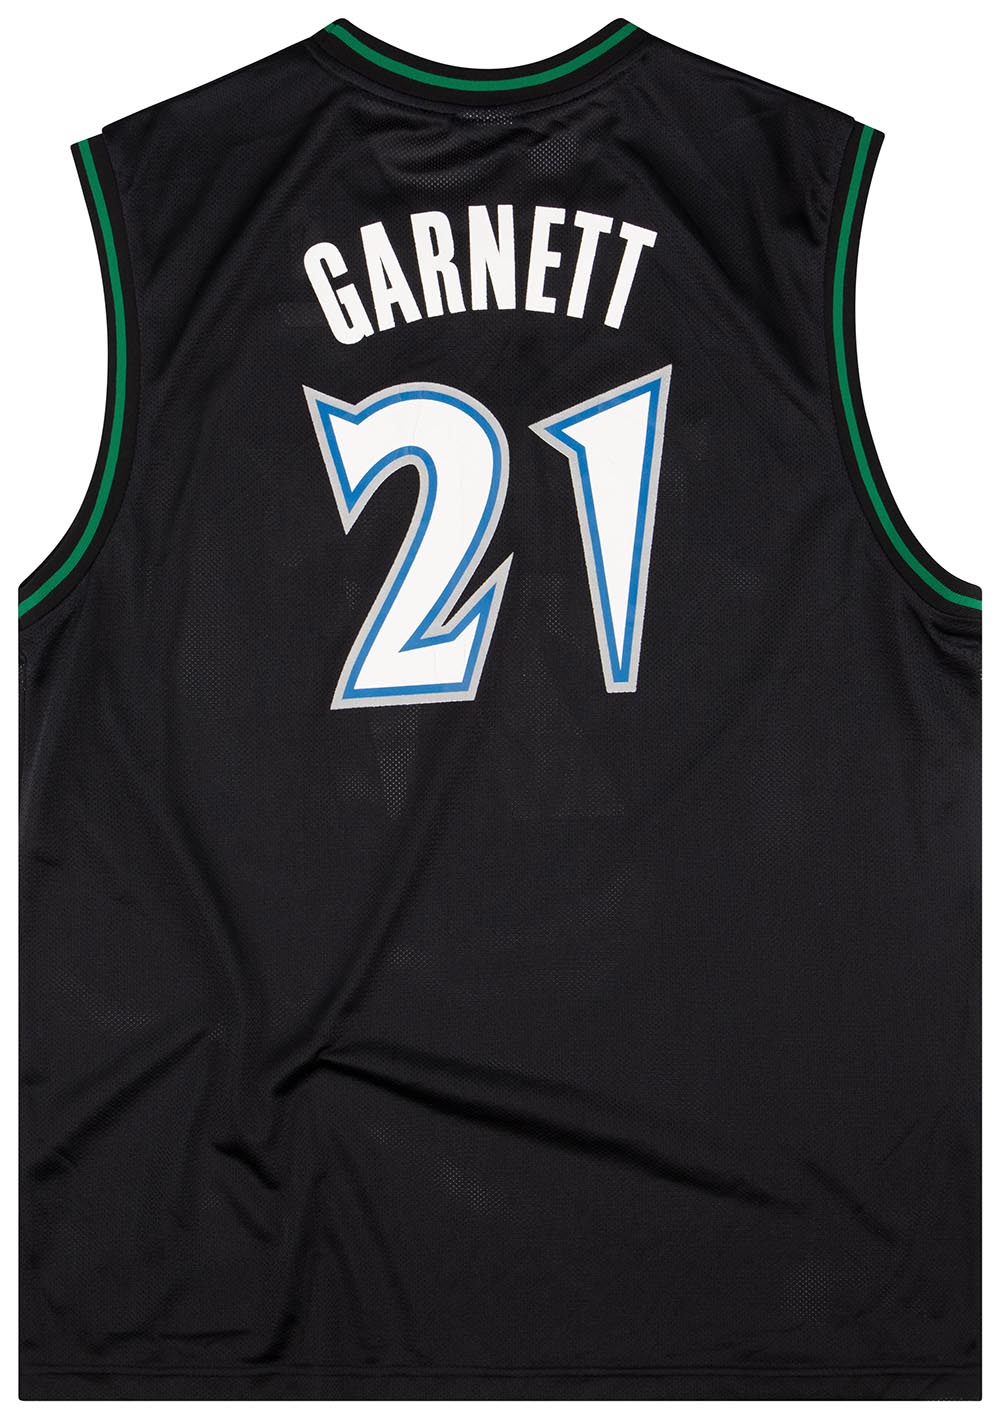 Boston Celtics Retro Kevin Garnett Jersey – DreamTeamJersey